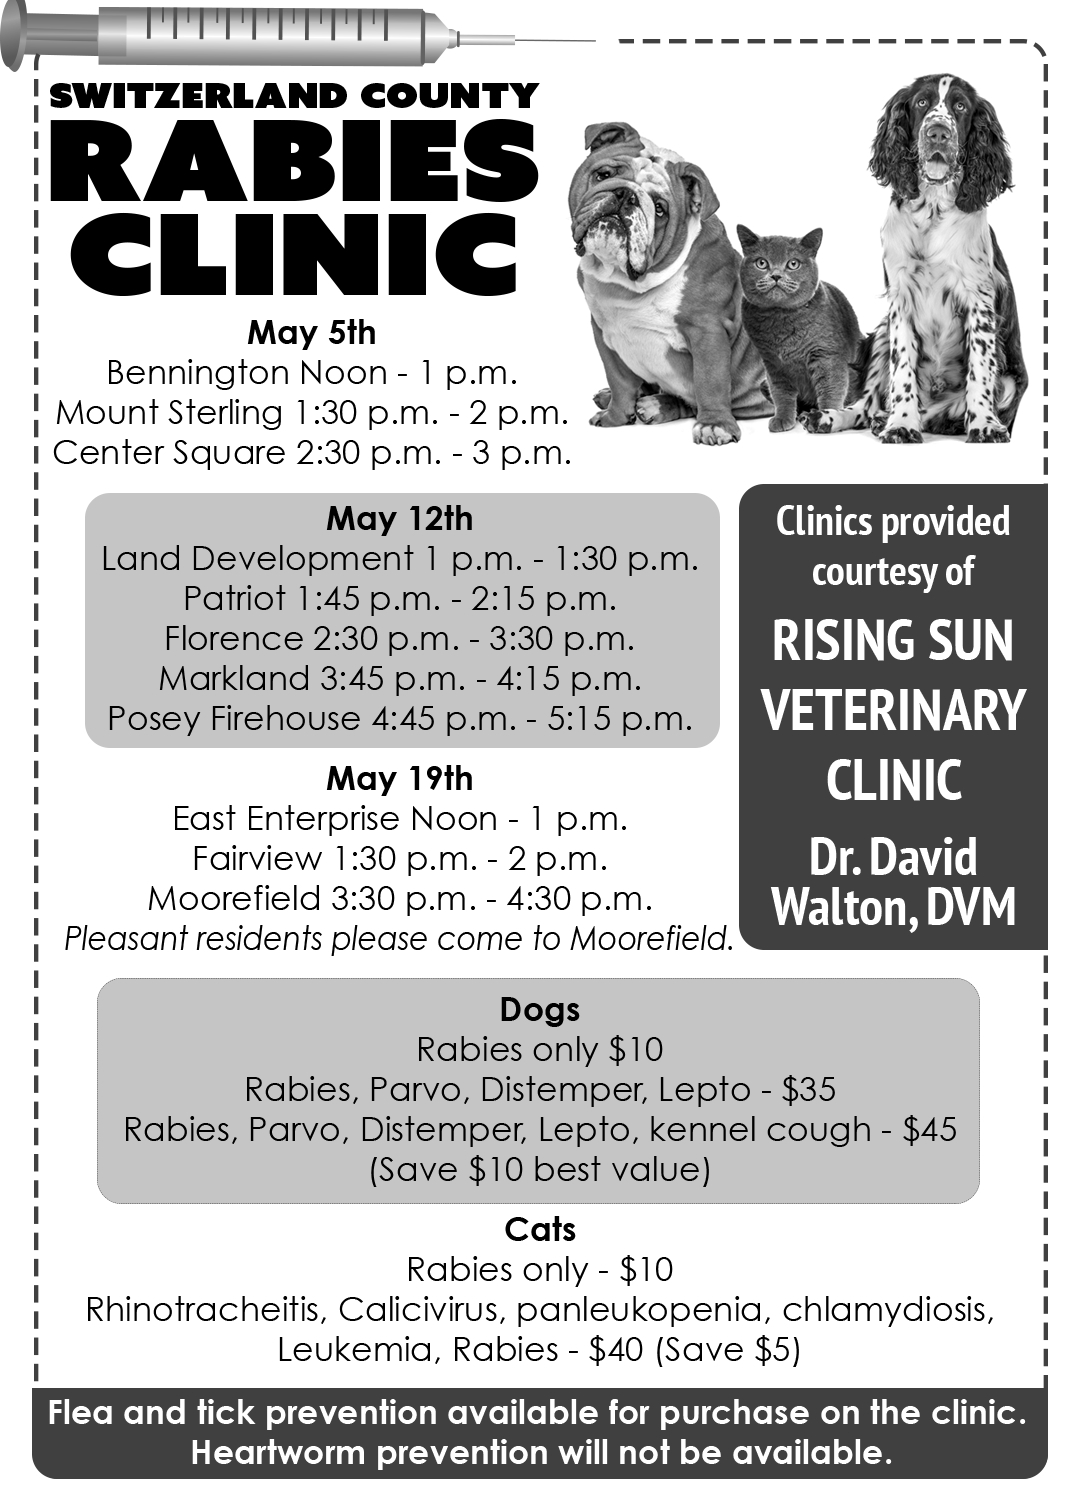 Rabies Clinic - May 5